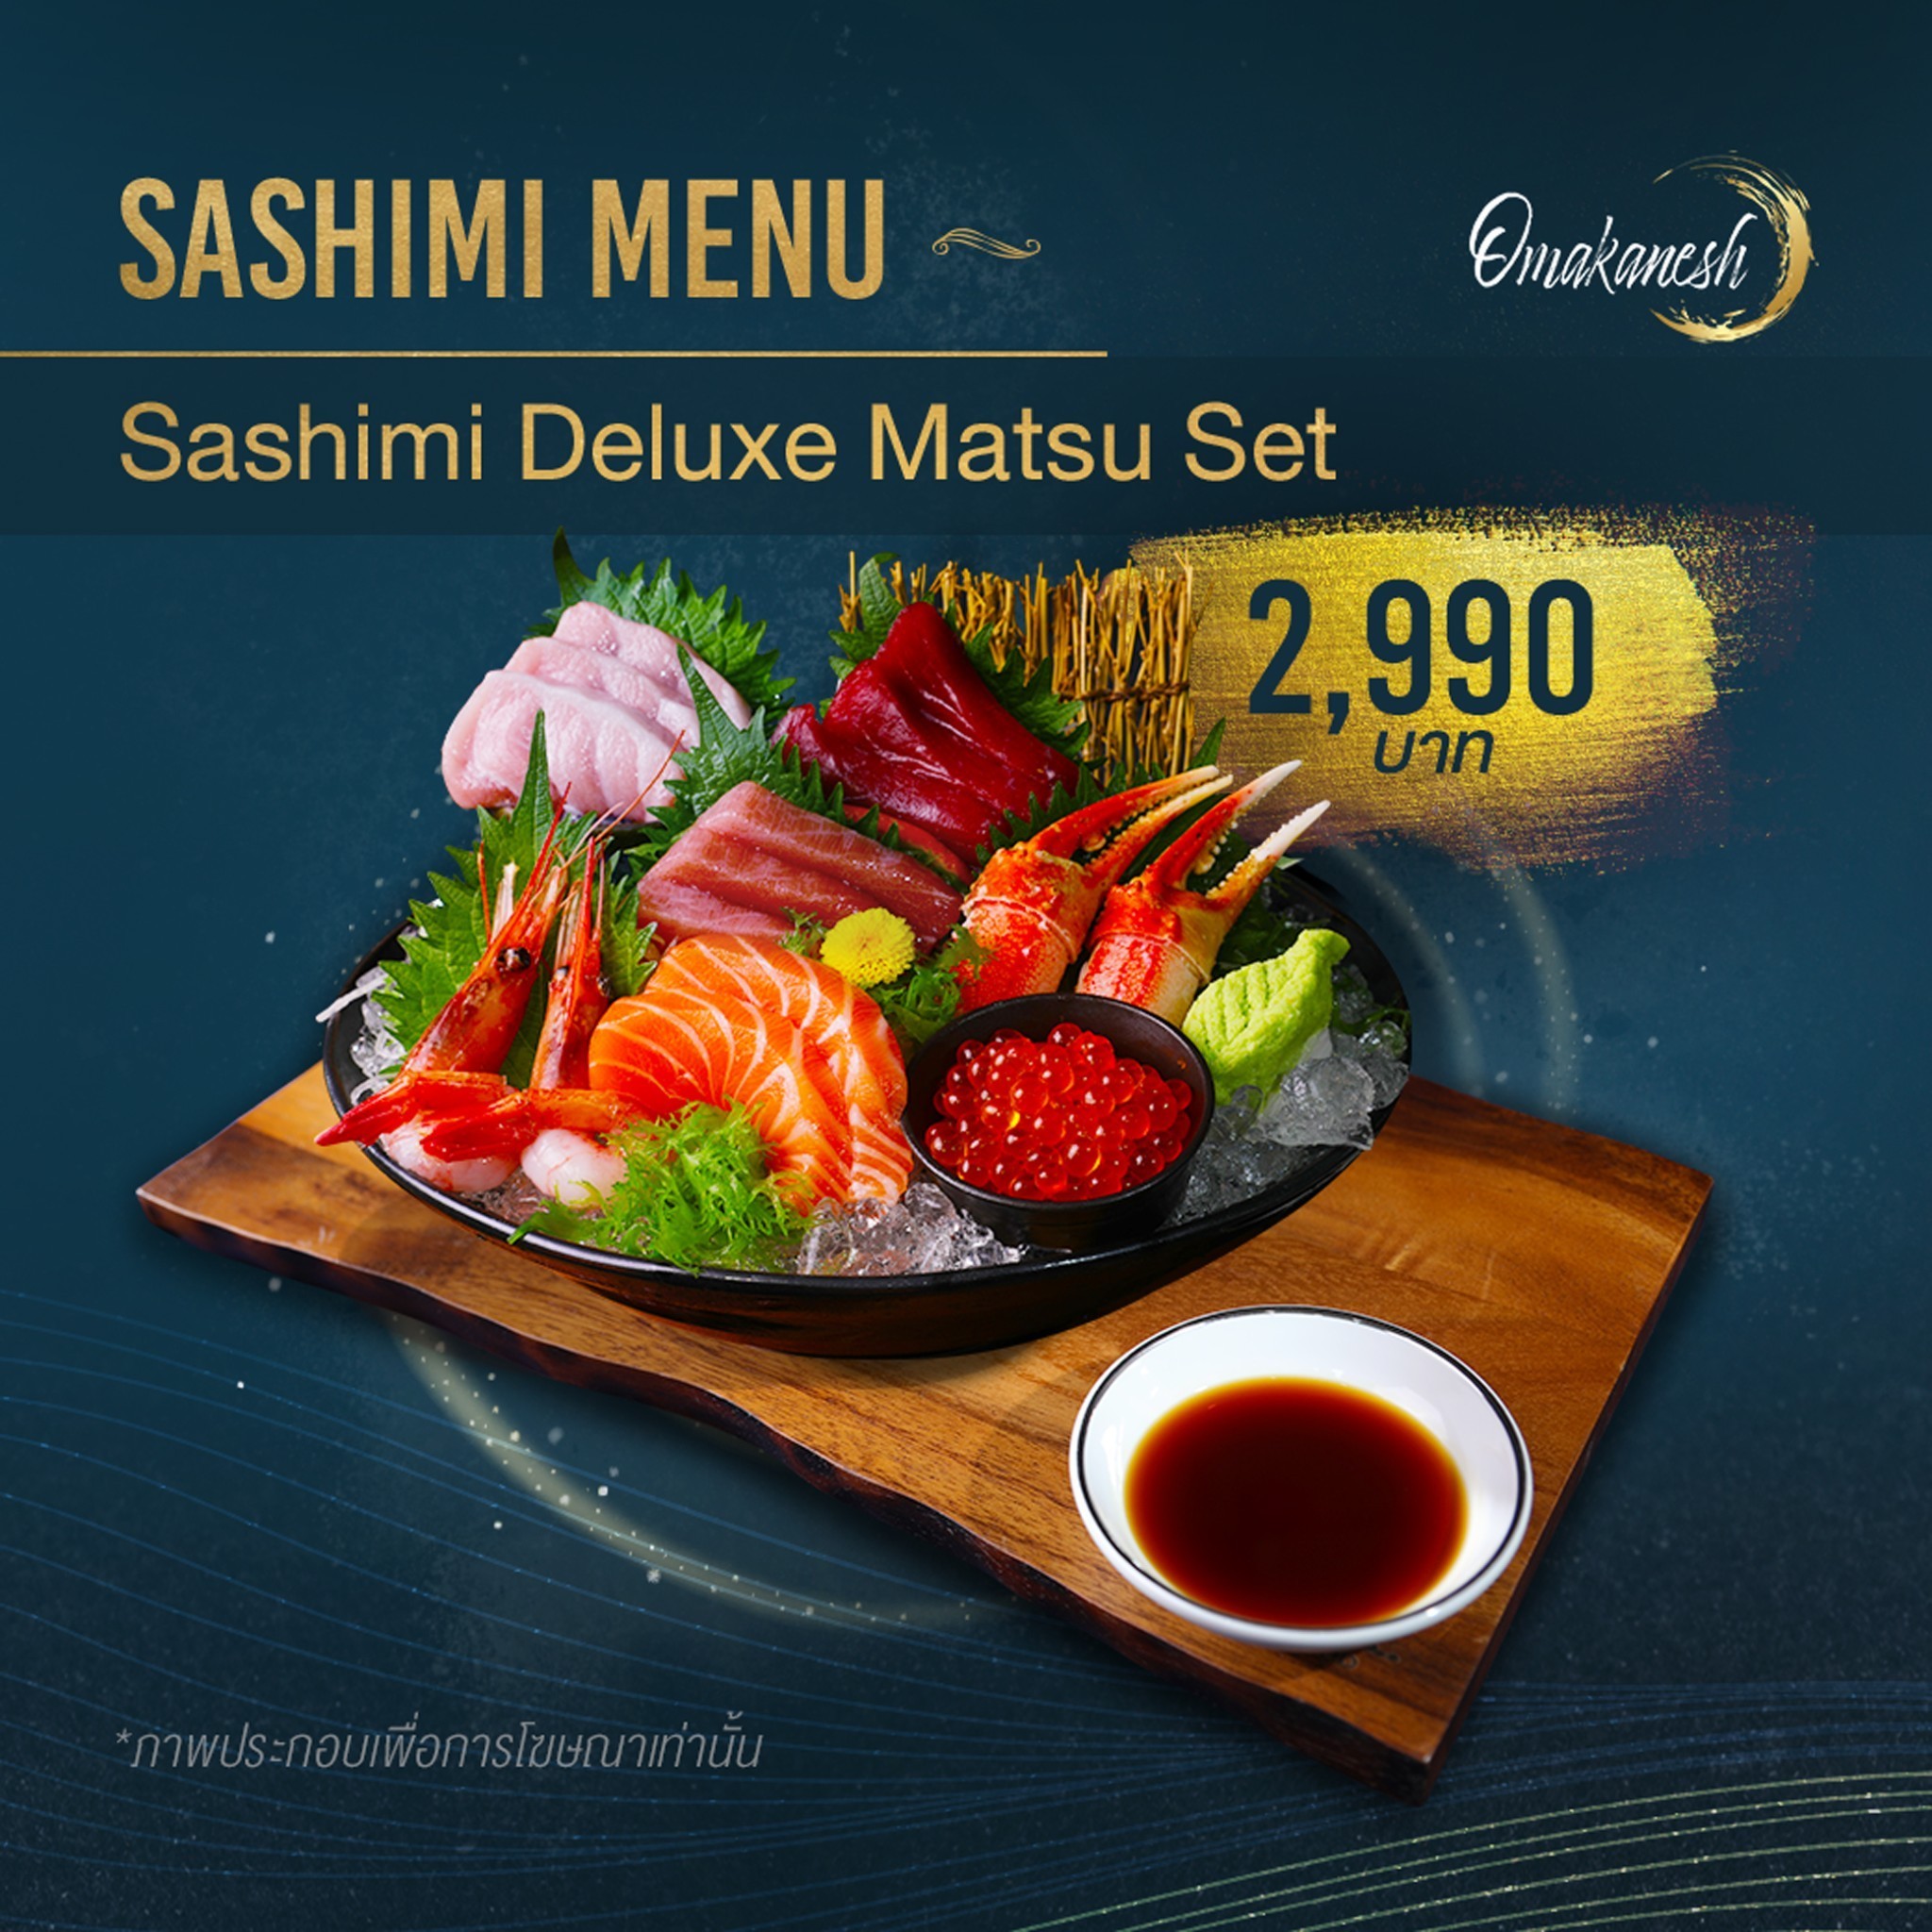 Sashimi Deluxe Matsu Set